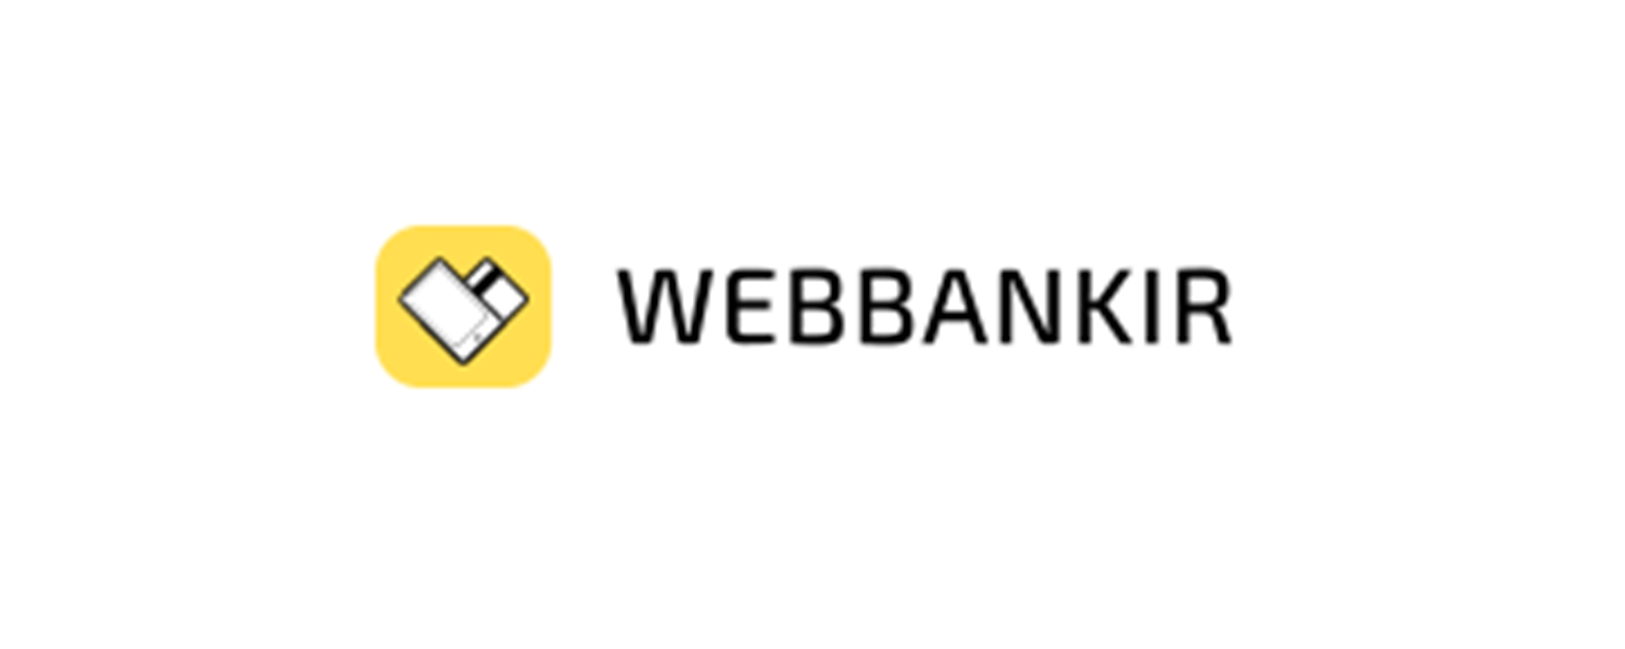 Ерк займ. Webbankir логотип. Веббанкир займ. Веббанкир картинки. Займы логотип.